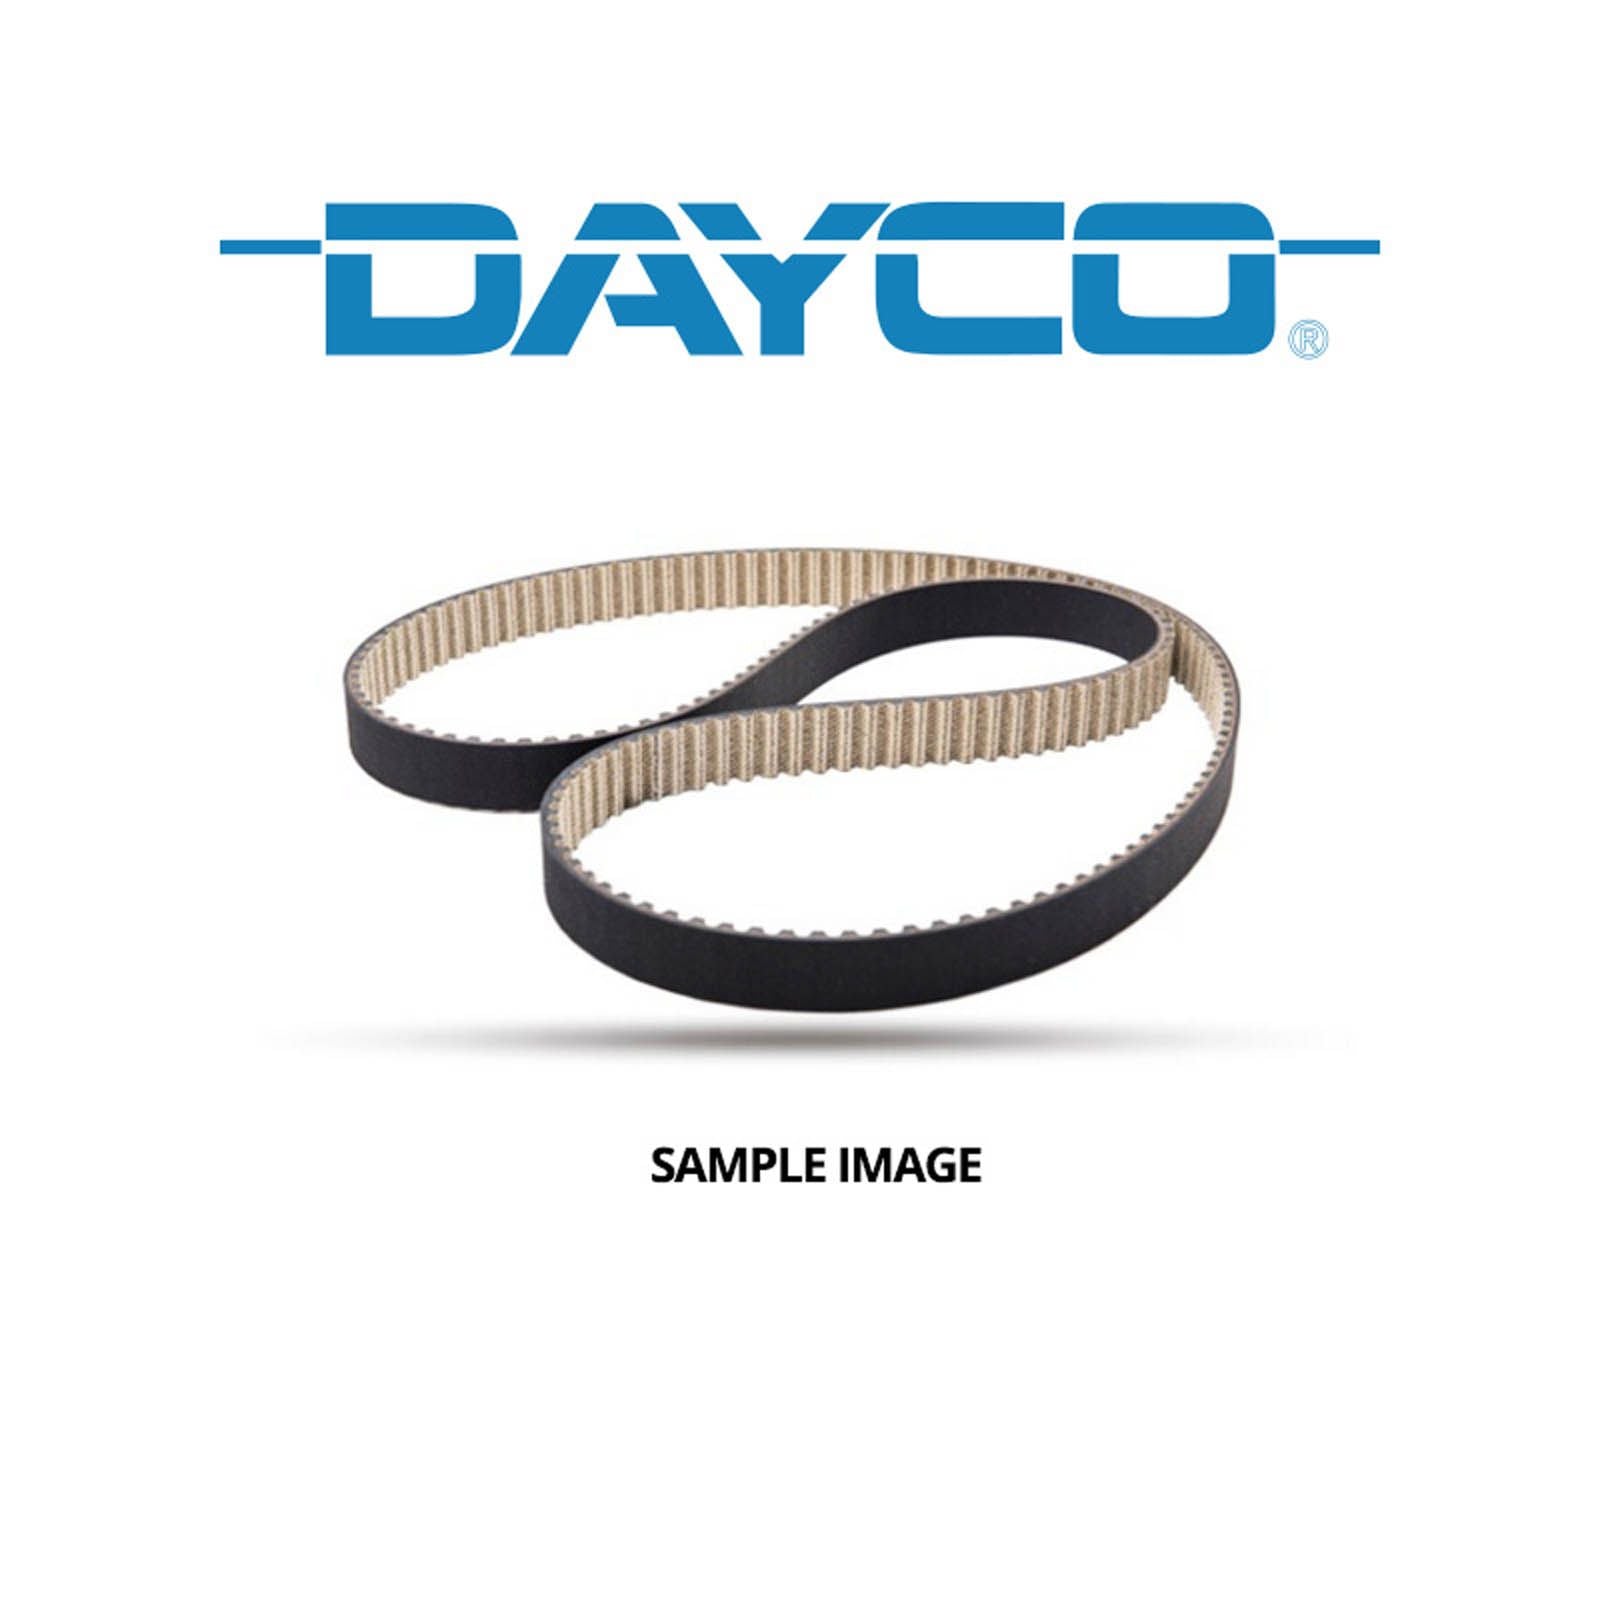 New DAYCO ATV Drive Belt HP 30.0 X 1.038m HP2003 #ATVDBHP2003